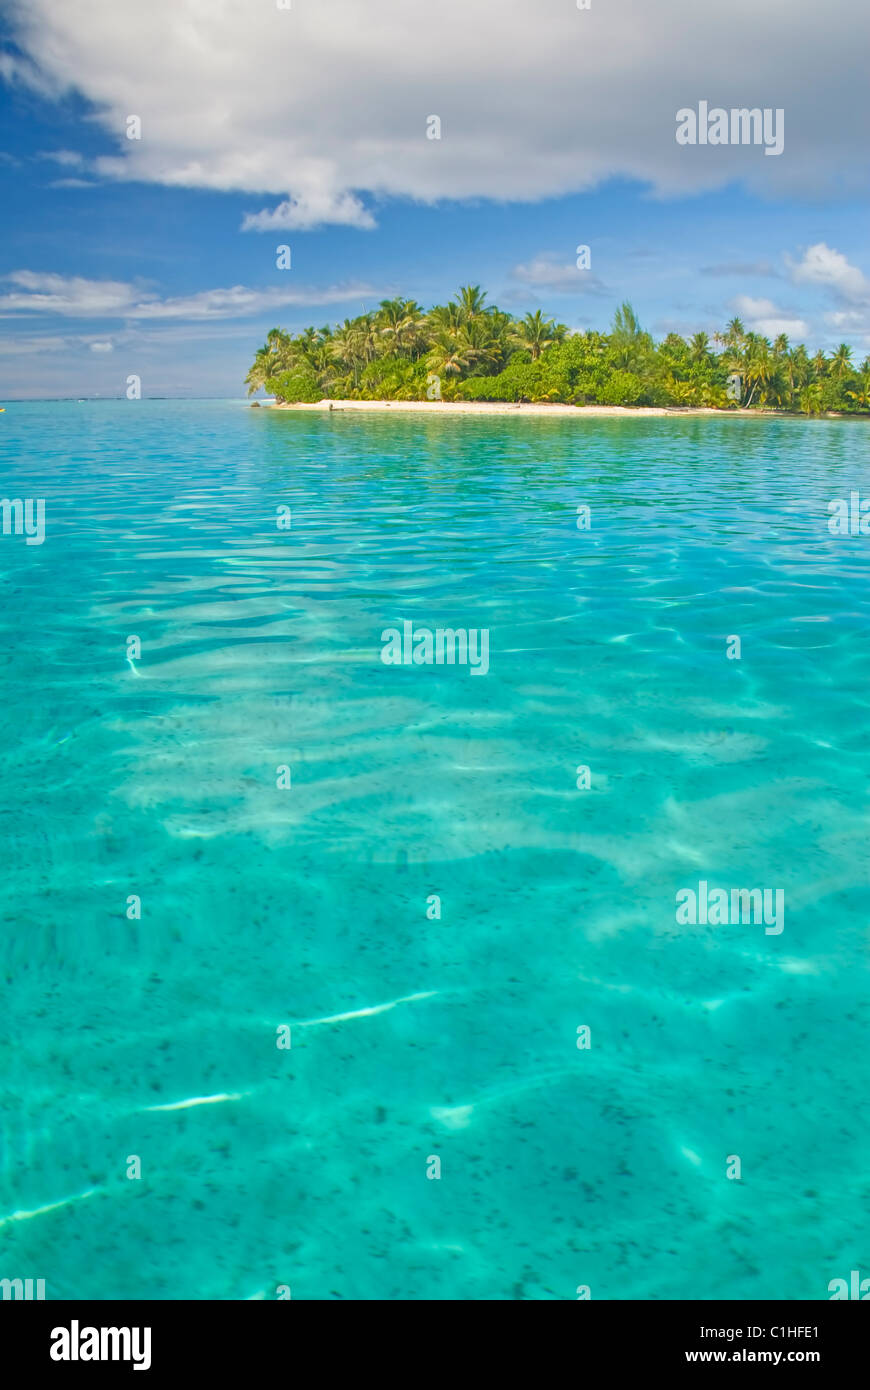 Tropical lagoon with island Stock Photo